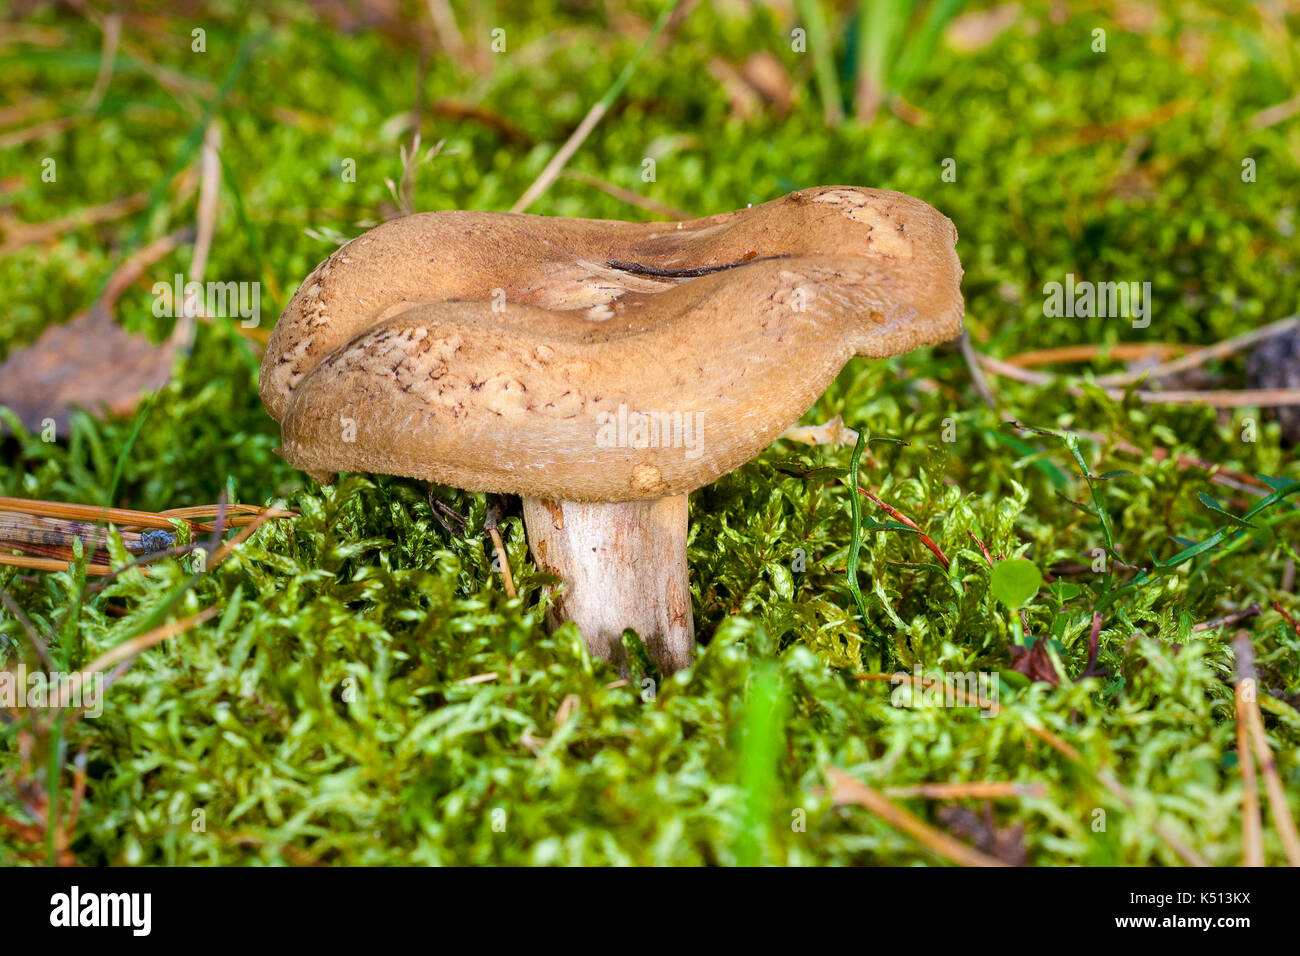 broun mushroom Paxillus involutus in moss Stock Photo